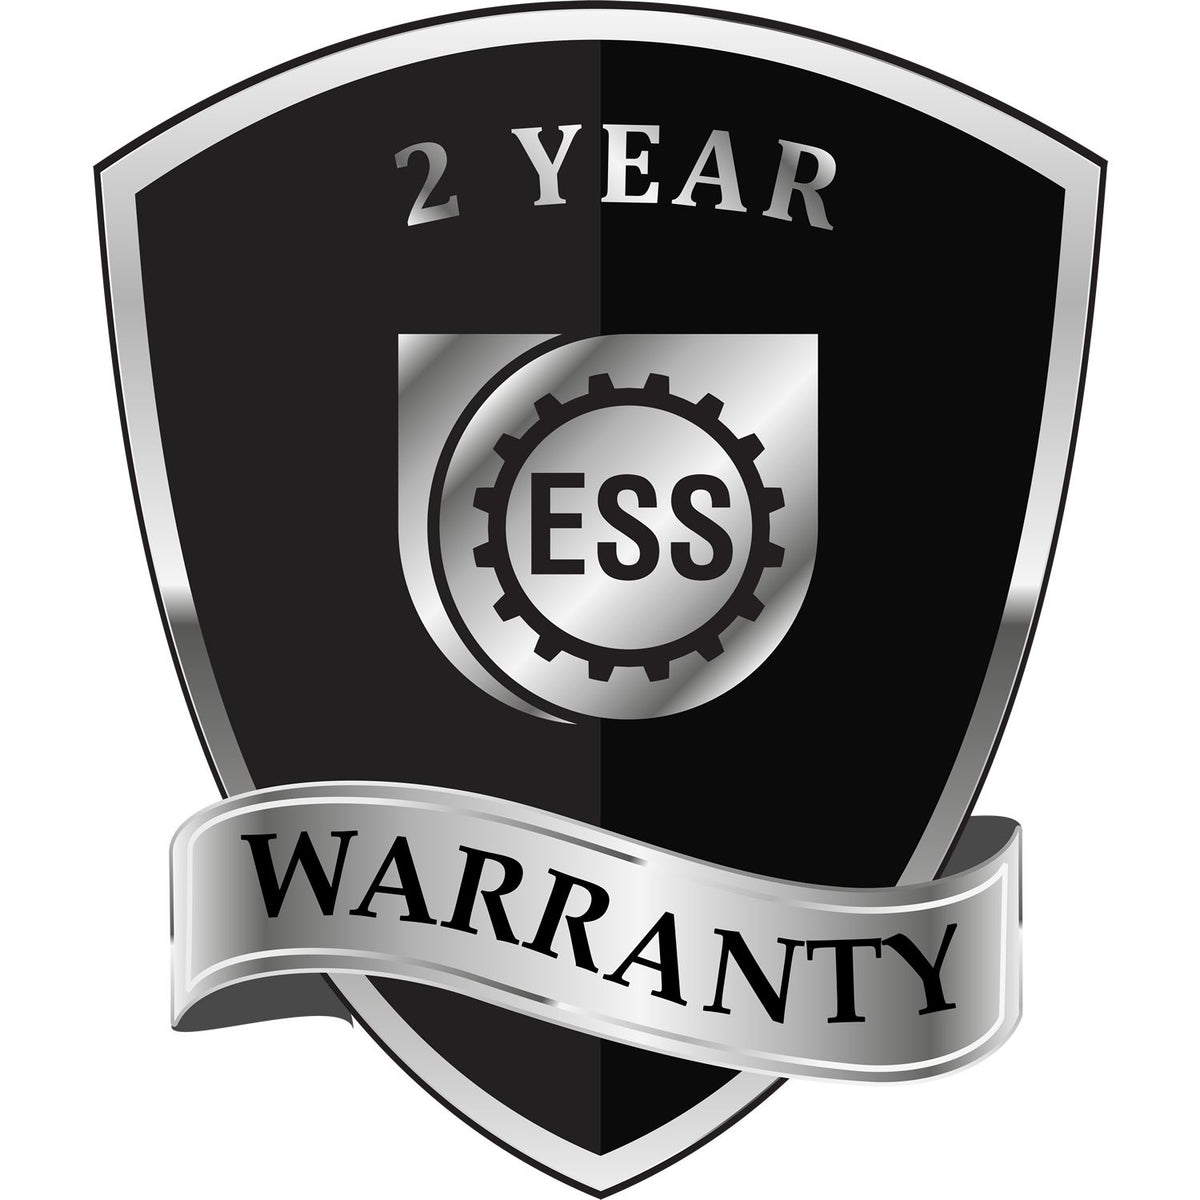 A badge or emblem showing a warranty icon for the Missouri Desk Surveyor Seal Embosser